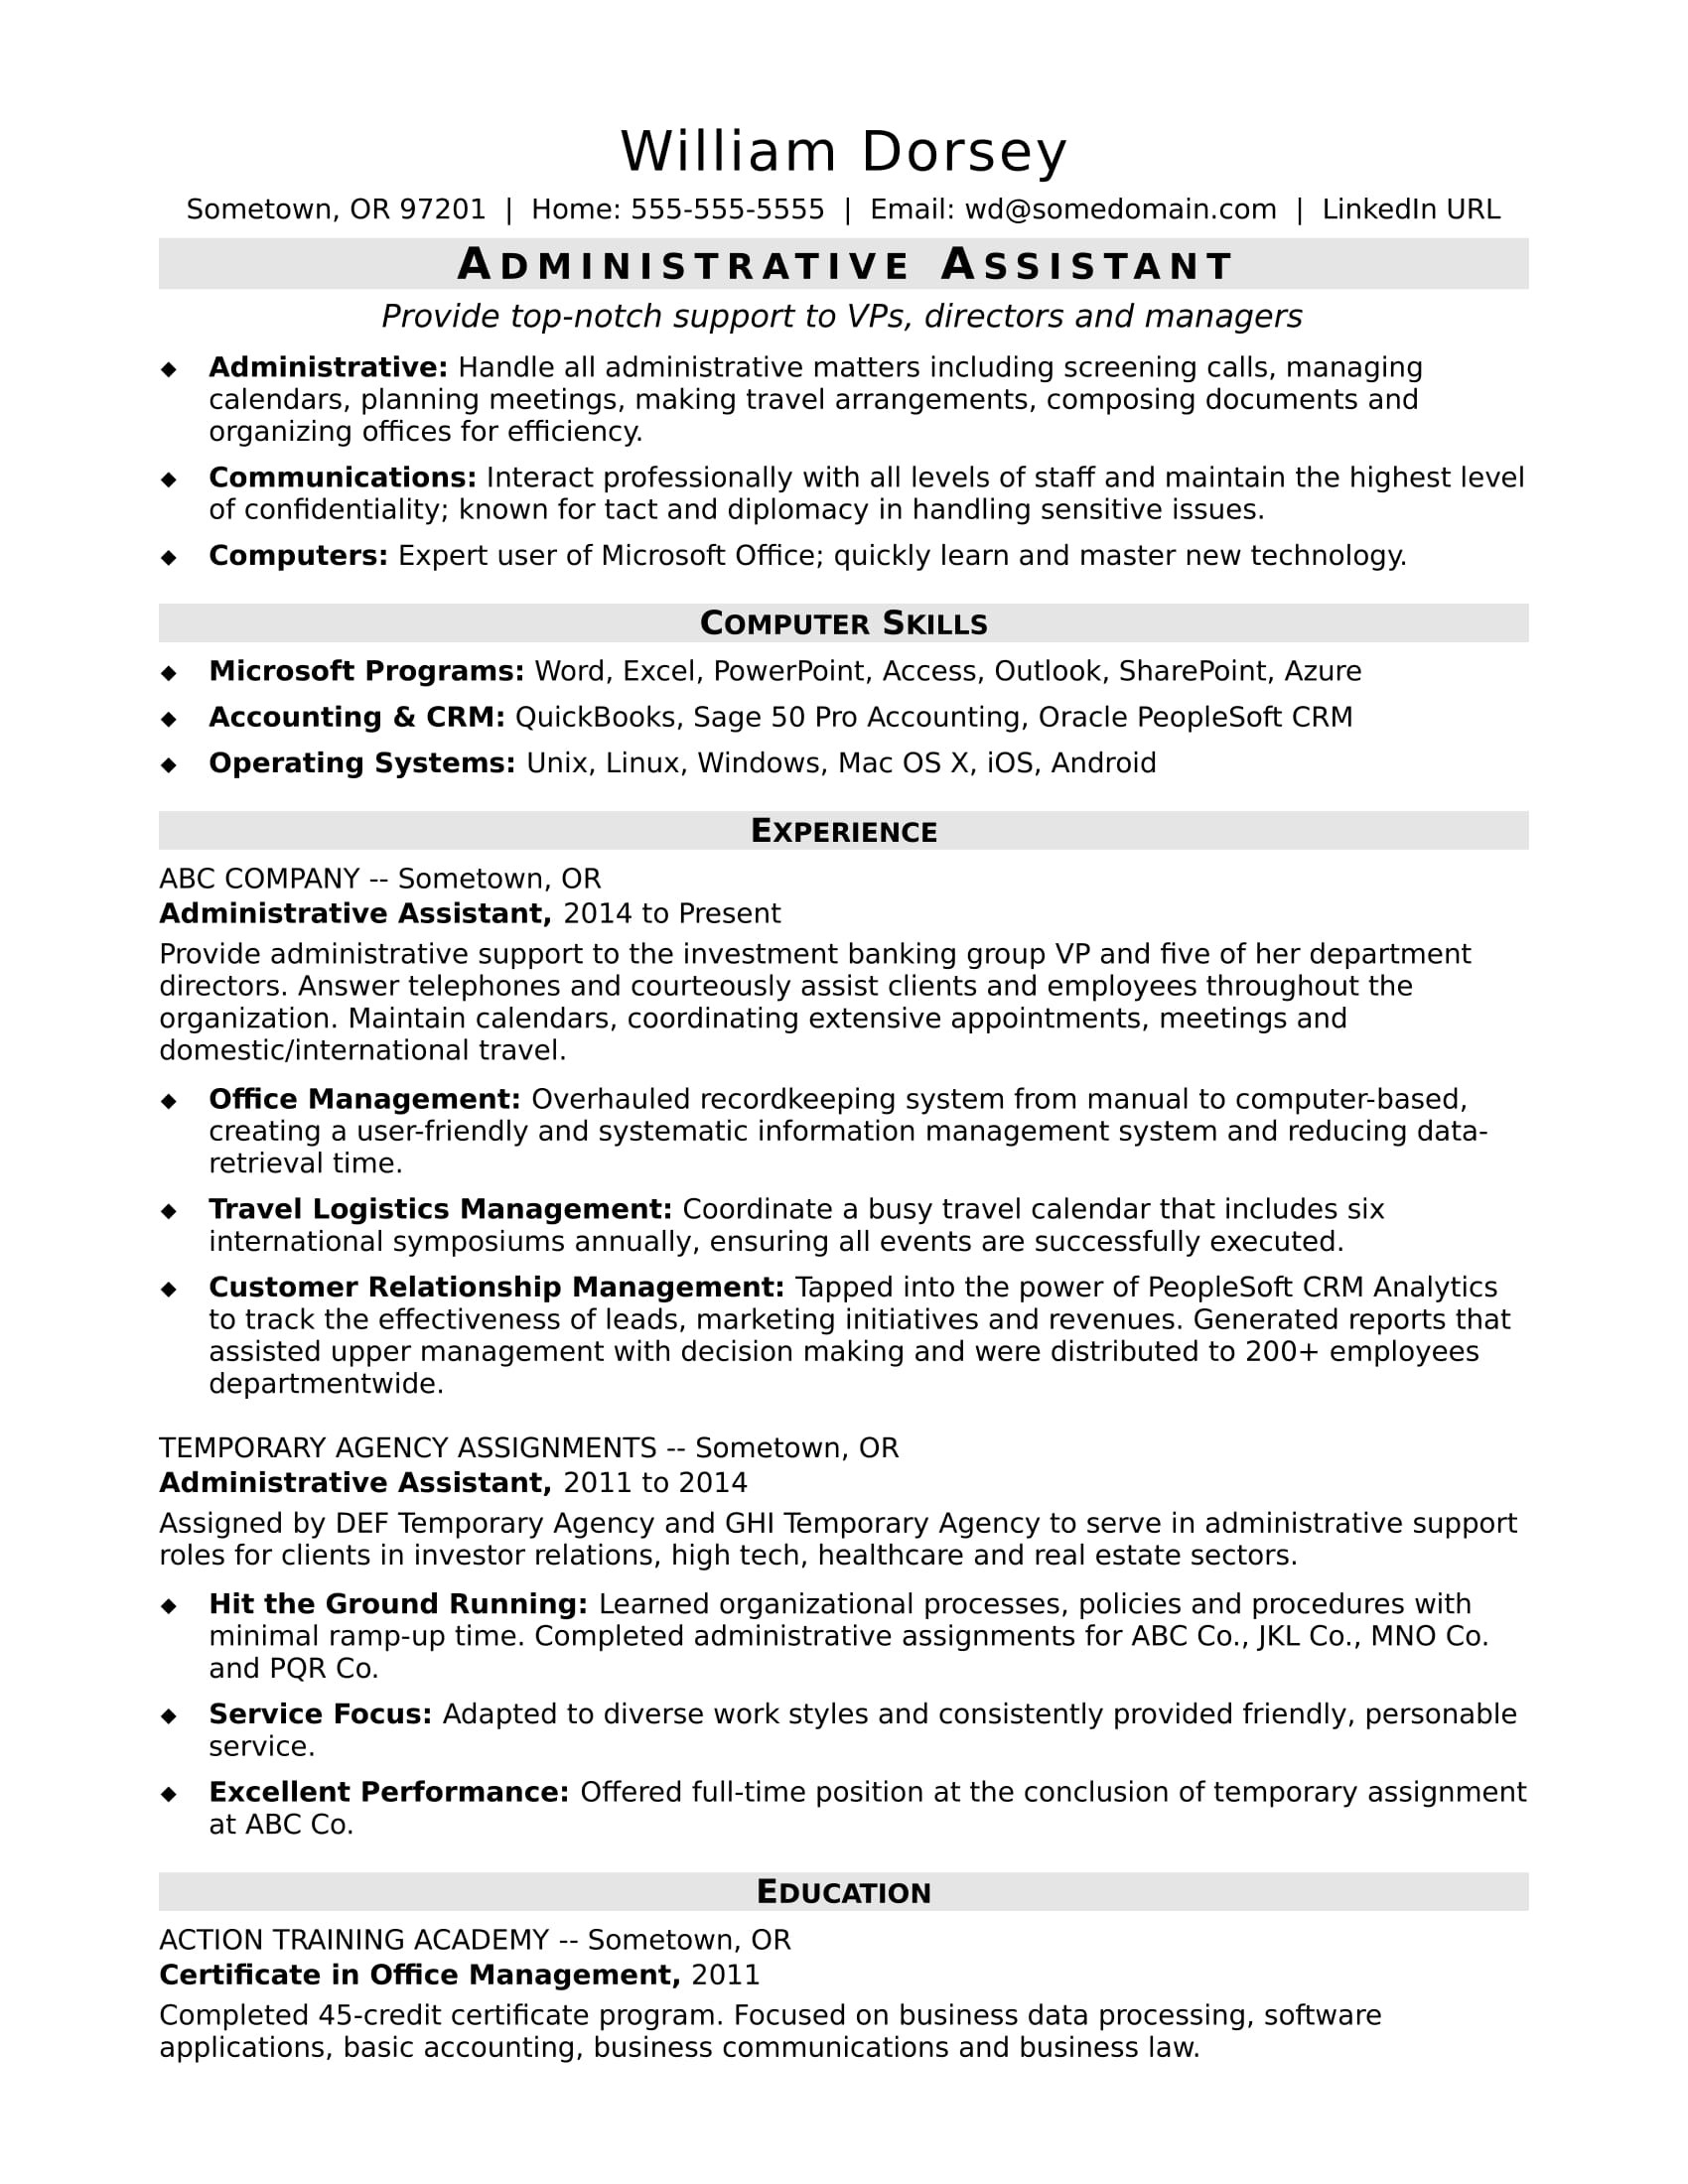 Sample Resume for A Temp Agency Administrative assistant Resume Sample Monster.com